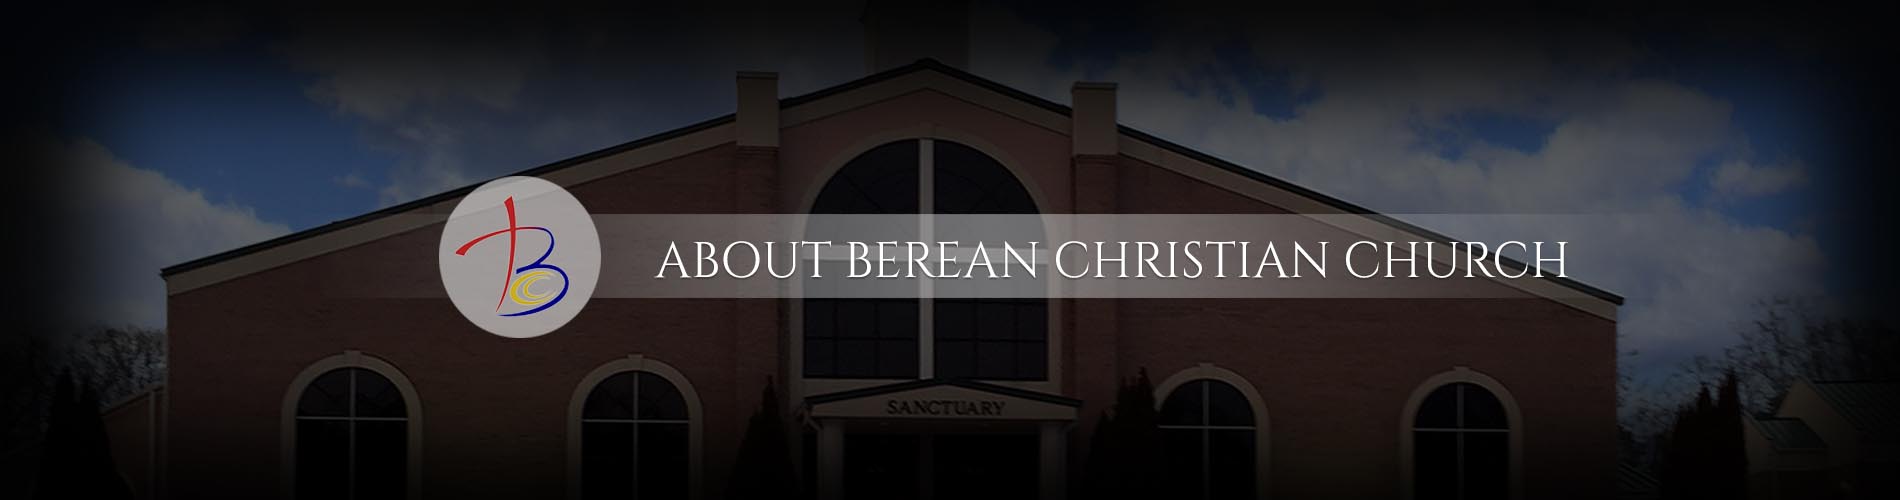 About Berean Christian Church